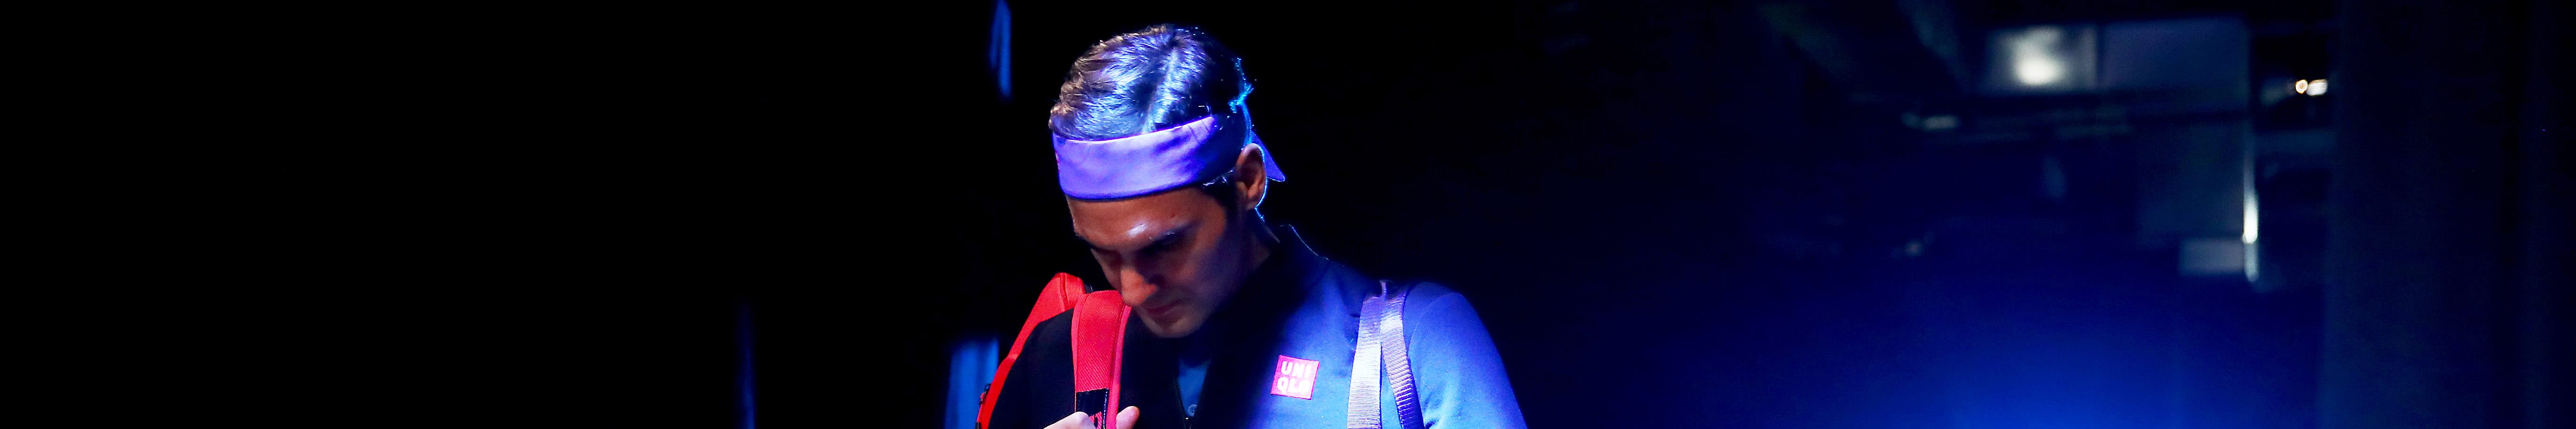 Roger Federer: Diese Turniere spielt er 2019